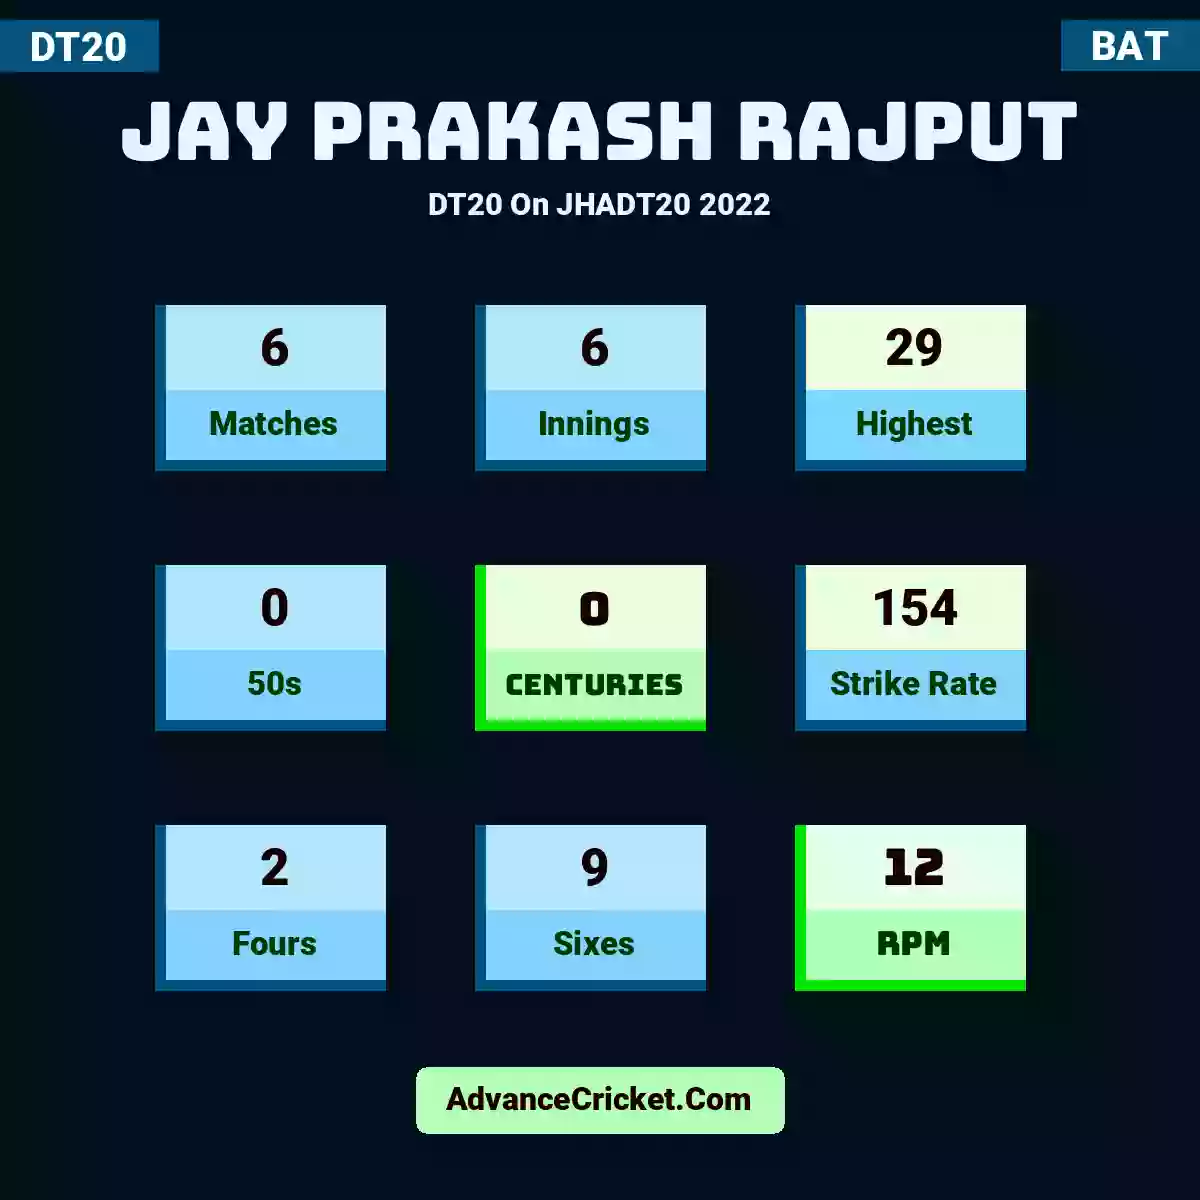 Jay Prakash Rajput DT20  On JHADT20 2022, Jay Prakash Rajput played 6 matches, scored 29 runs as highest, 0 half-centuries, and 0 centuries, with a strike rate of 154. J.Prakash.Rajput hit 2 fours and 9 sixes, with an RPM of 12.